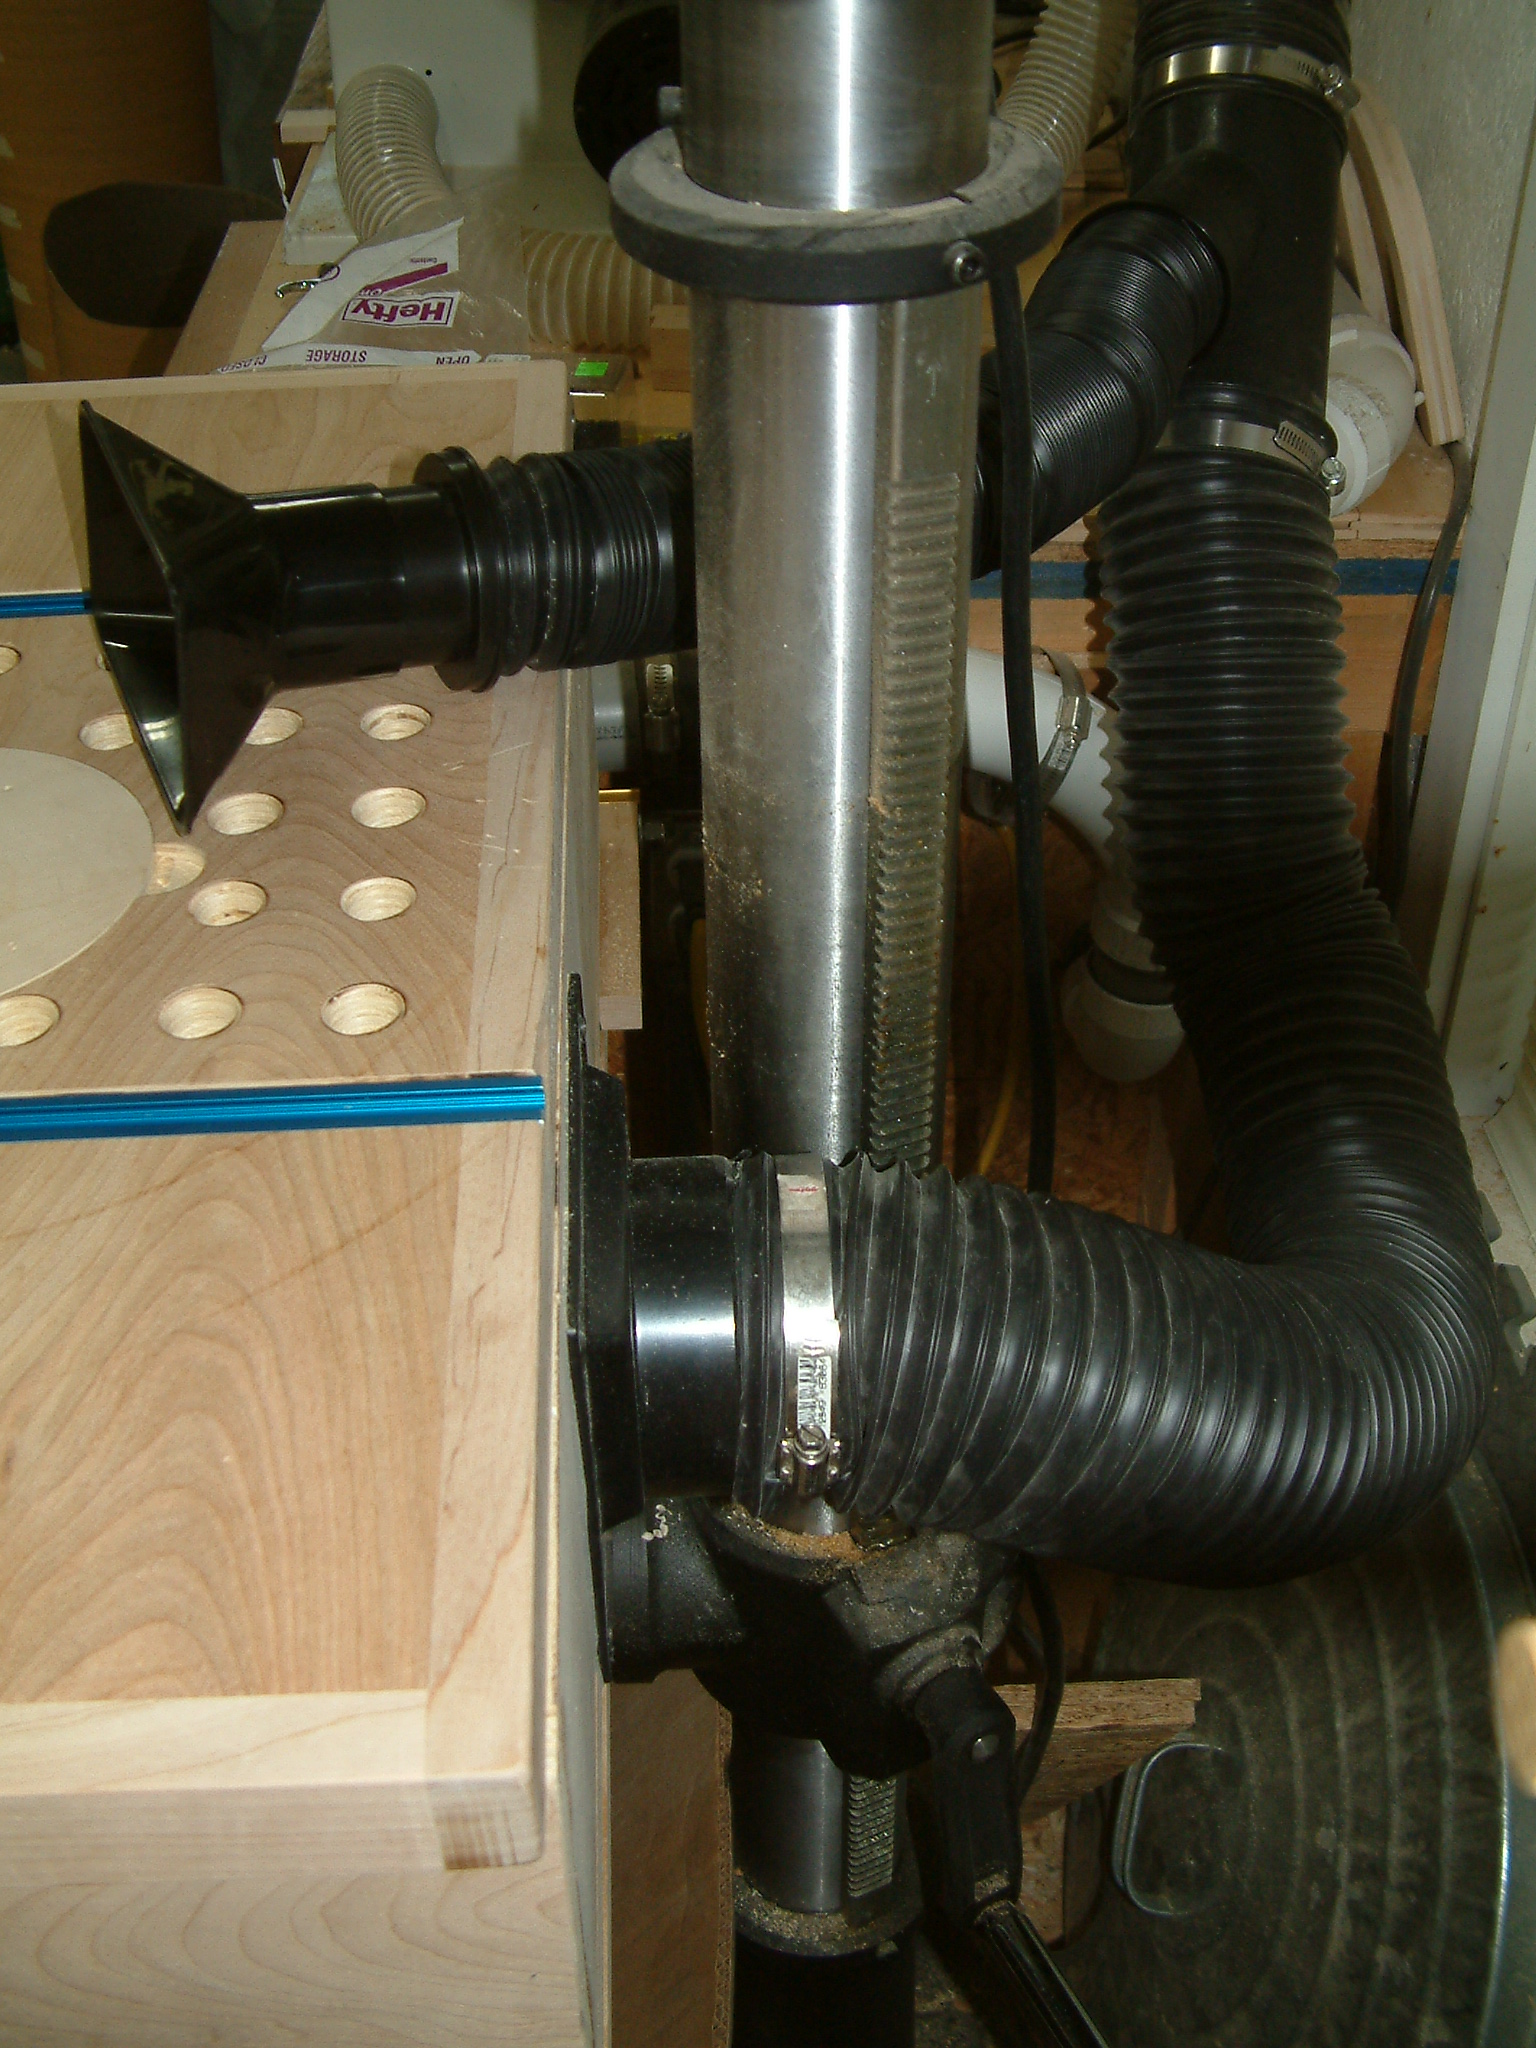 Drill press table